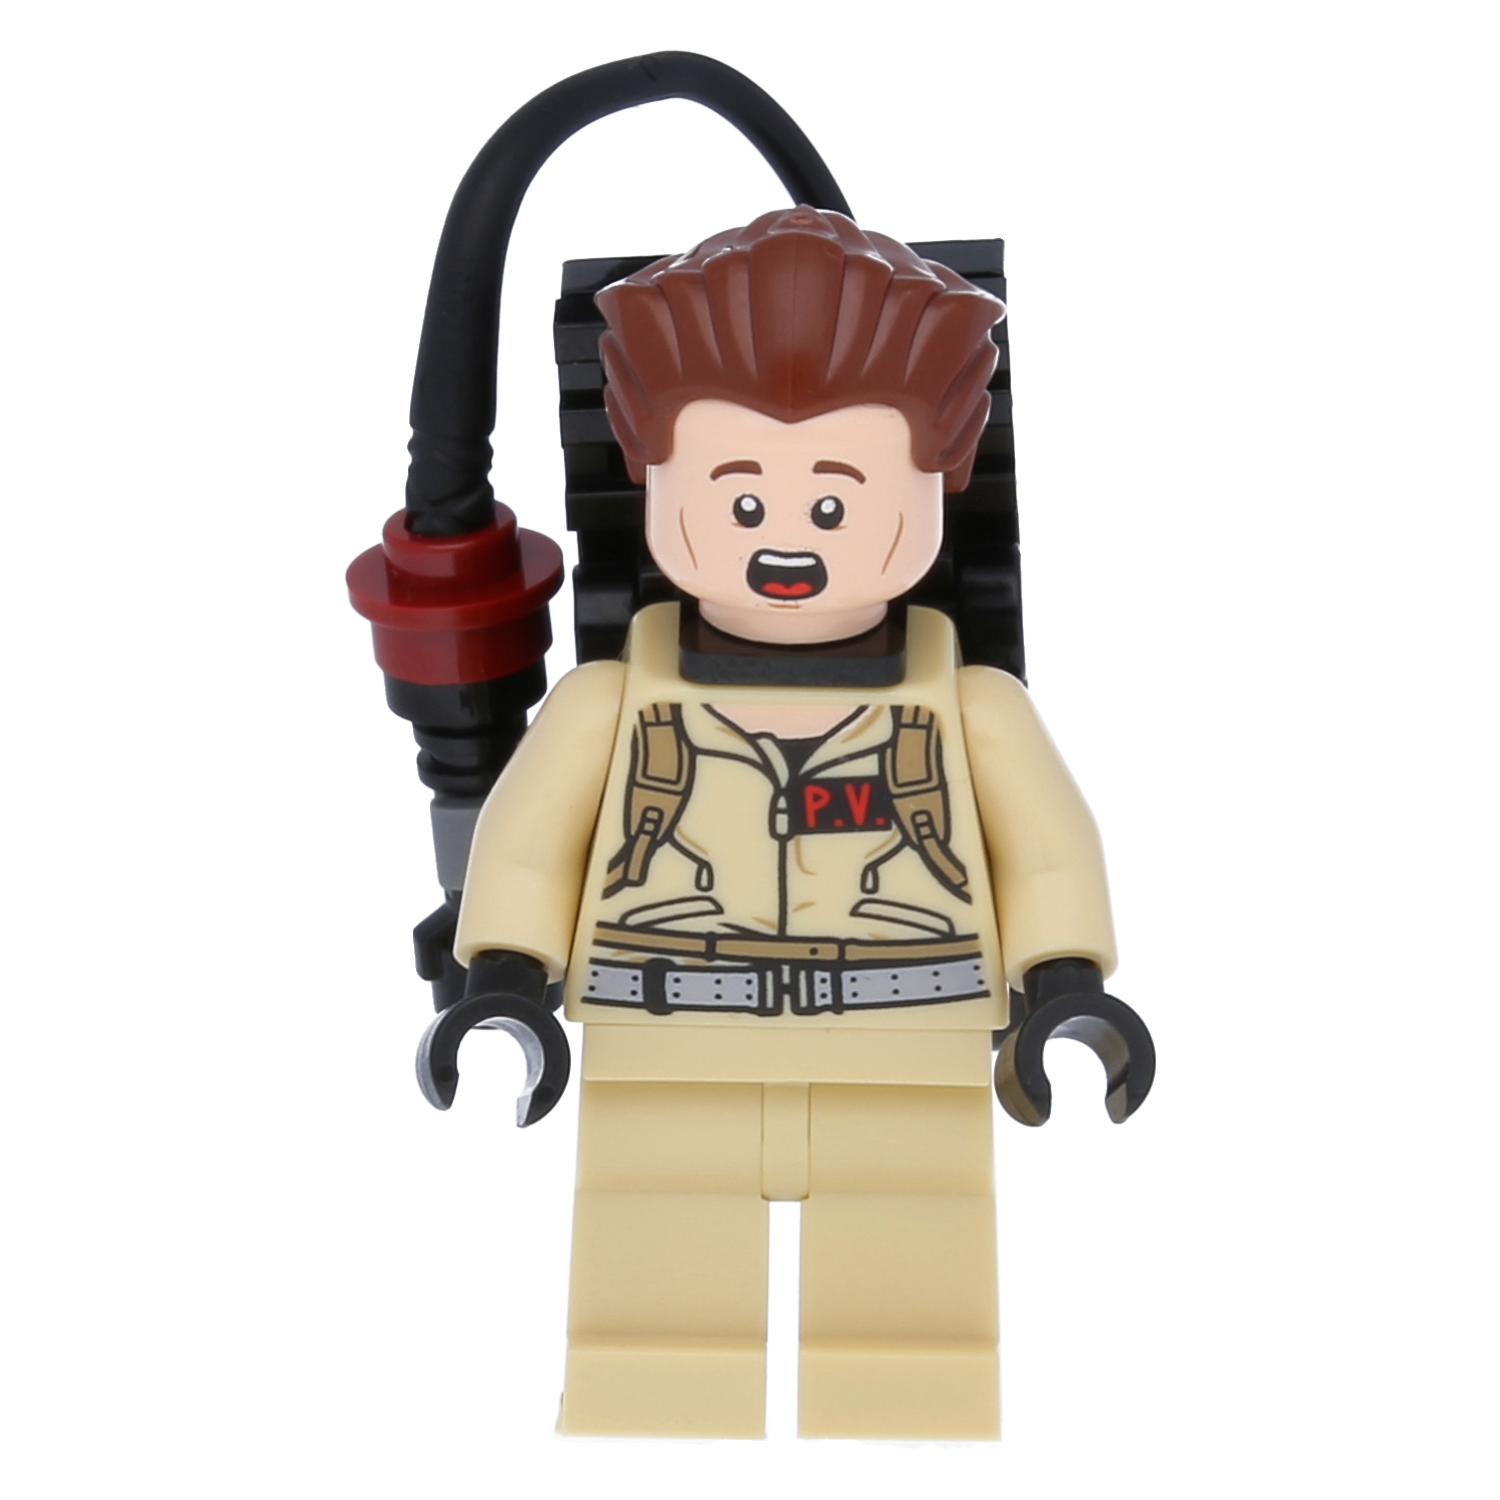 LEGO Minifigur - Dr. Peter Venkman mit Protonenstrahler (Ghostbusters)